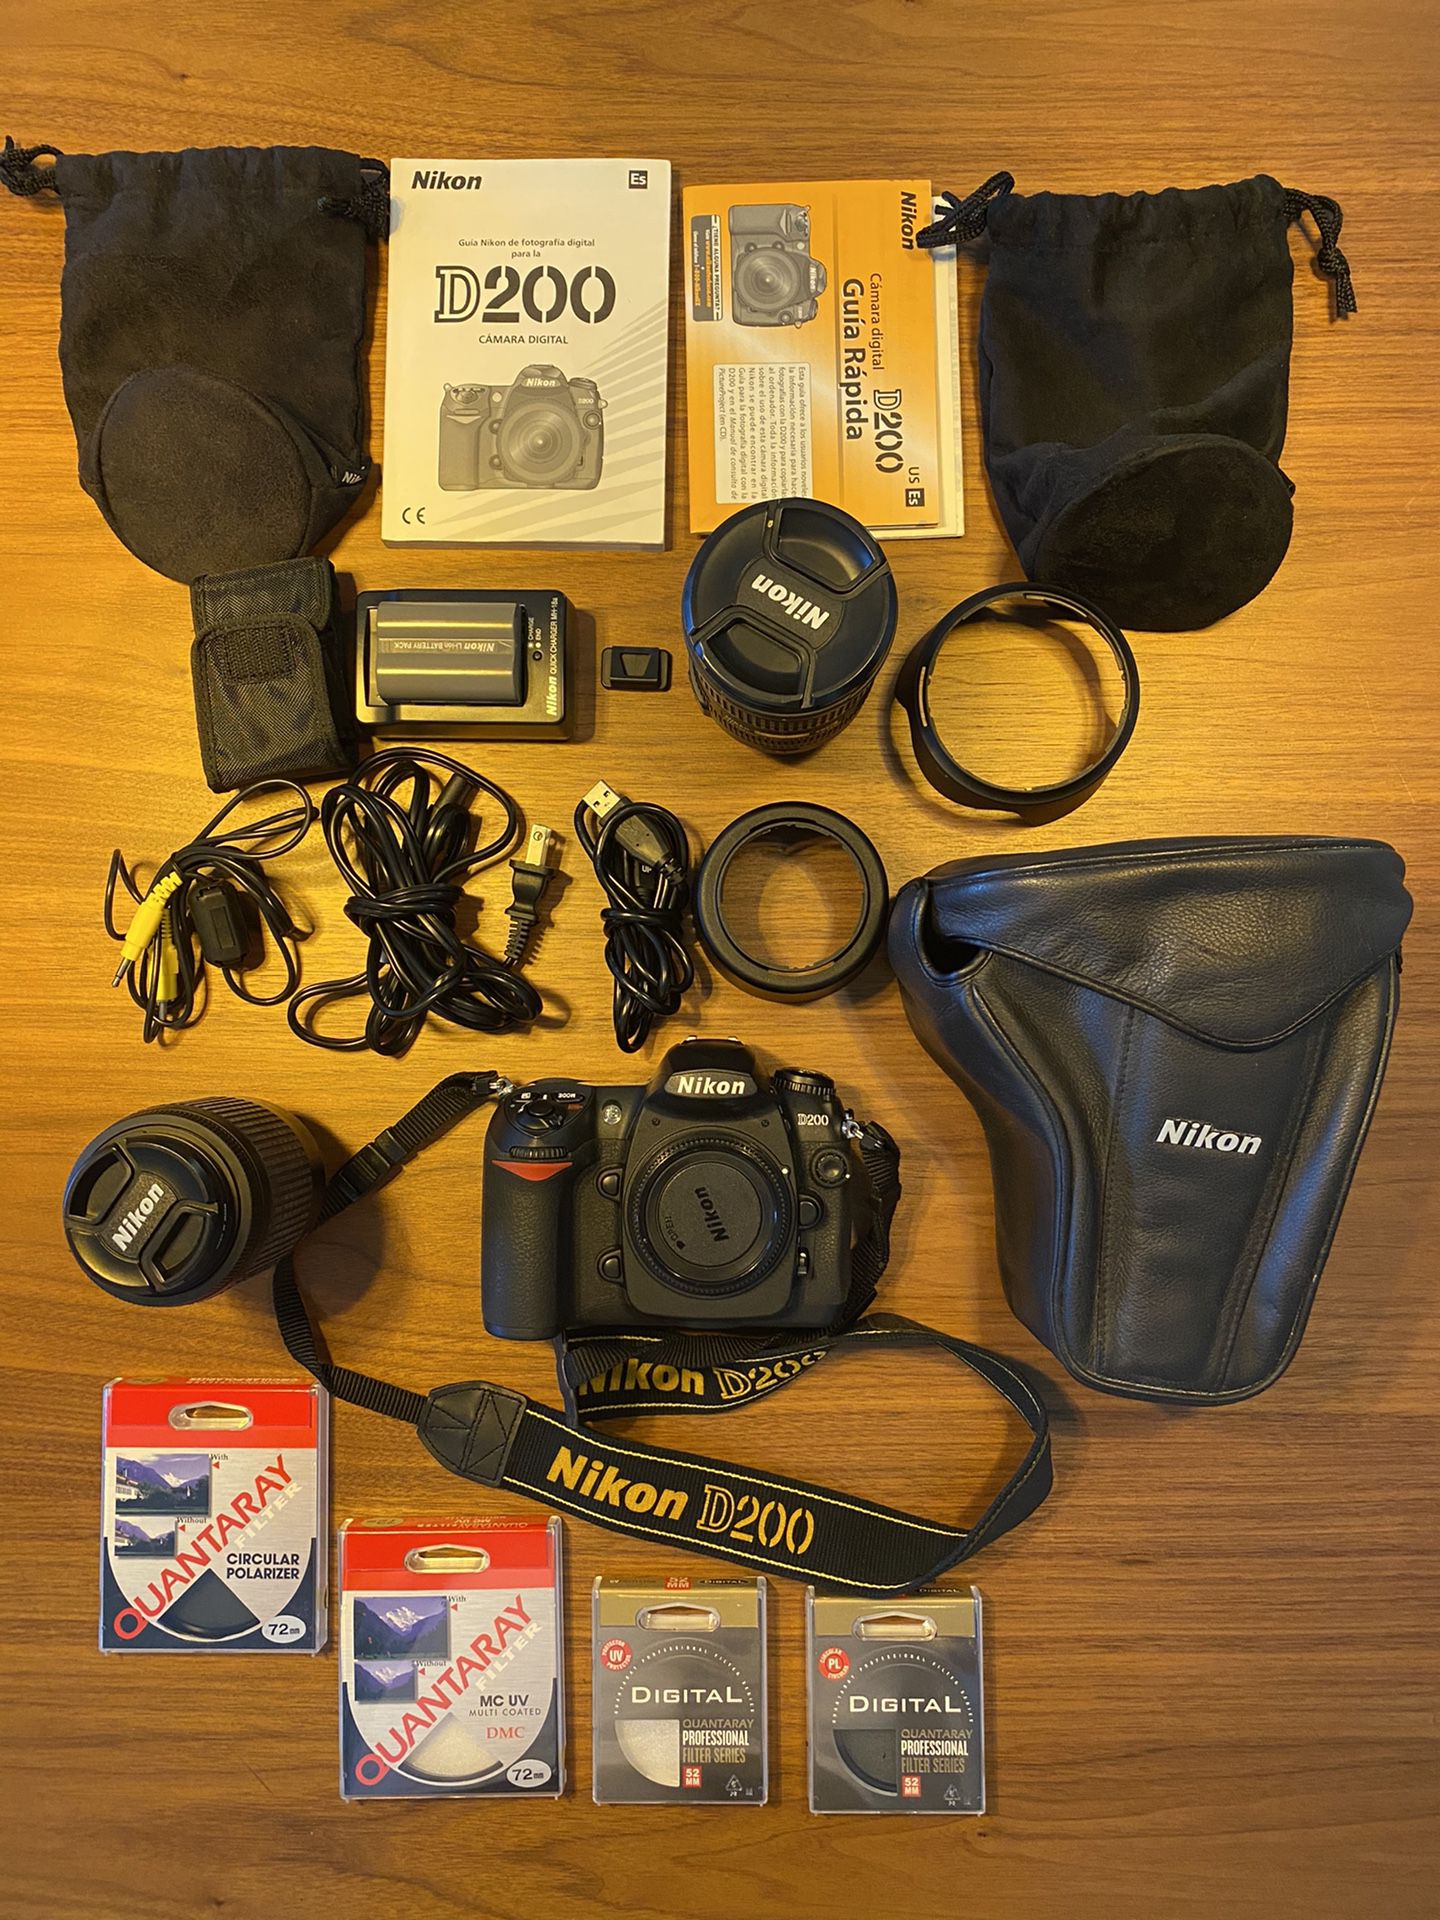 Nikon D200. Lenses & accessories